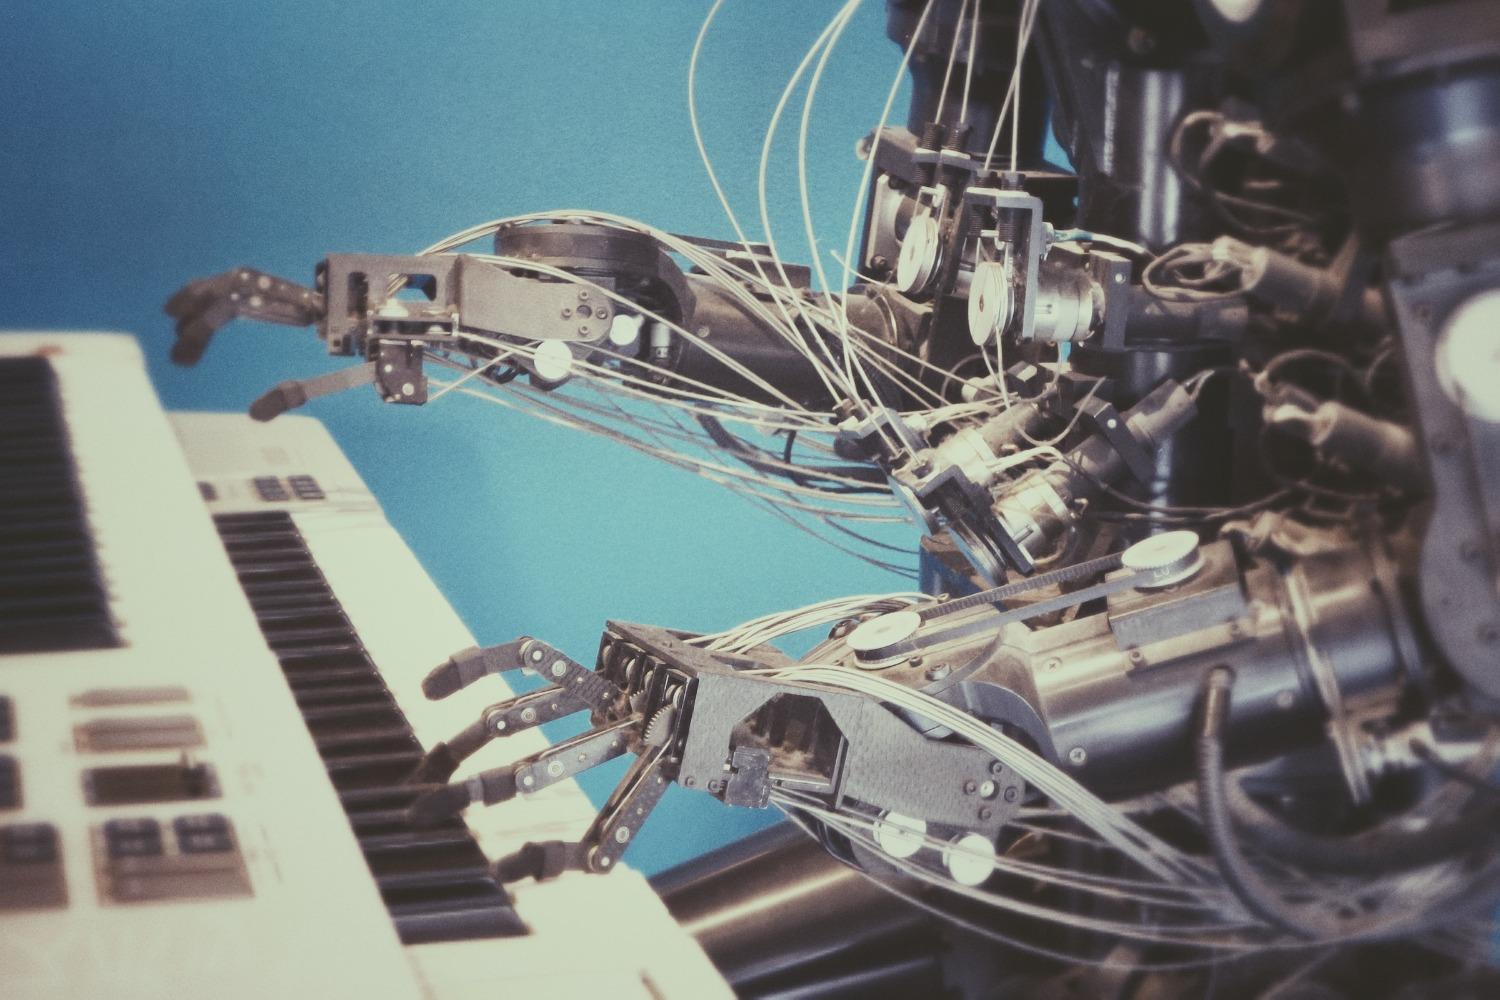 Robot Playing Piano